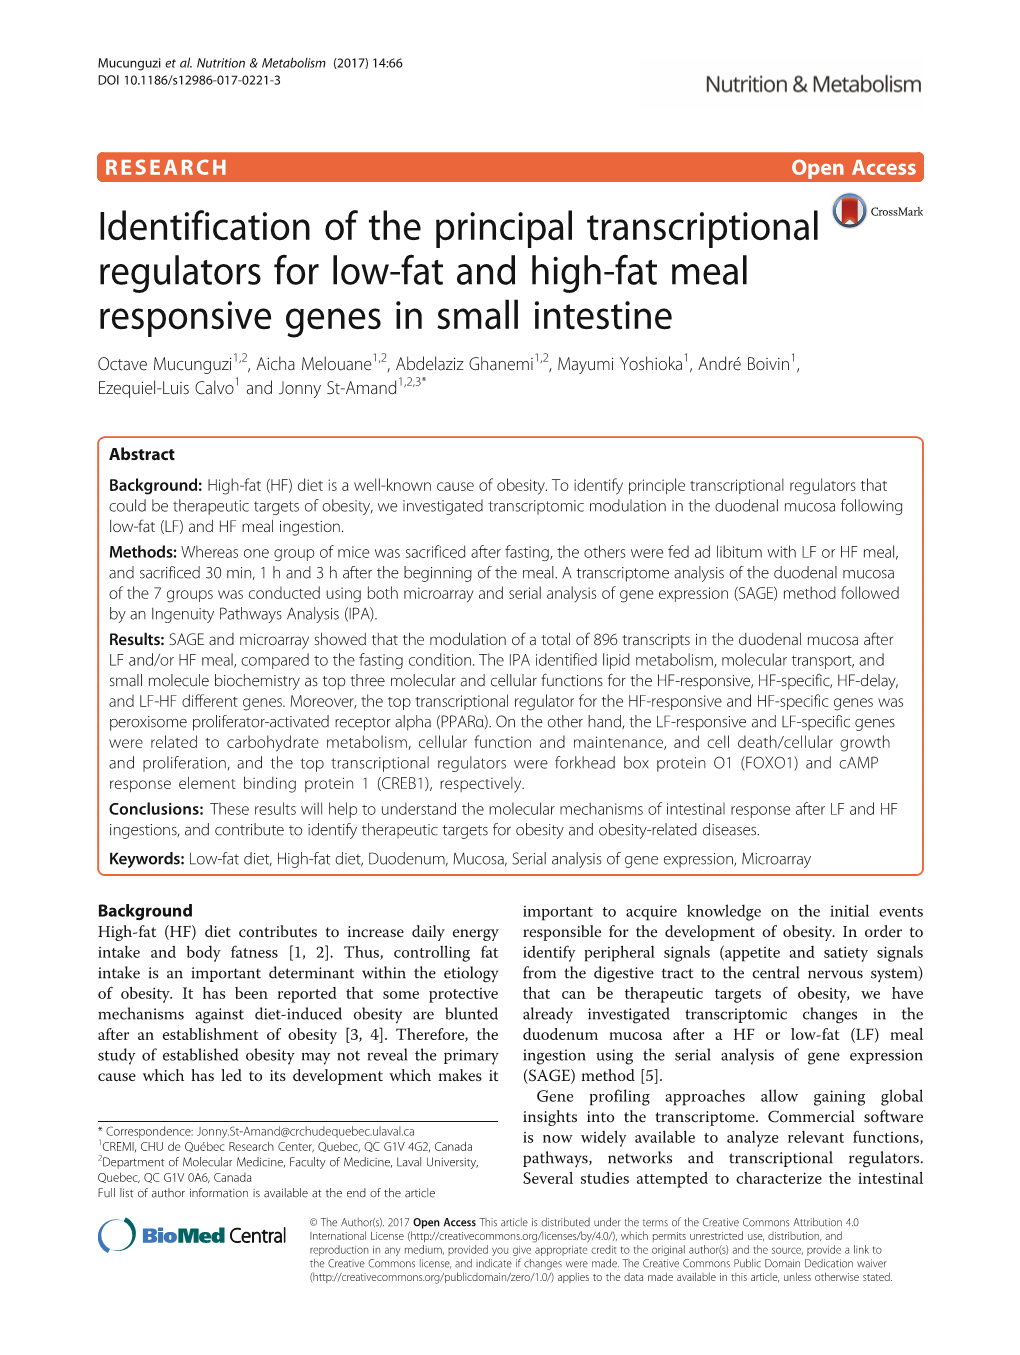 Identification of the Principal Transcriptional Regulators for Low-Fat